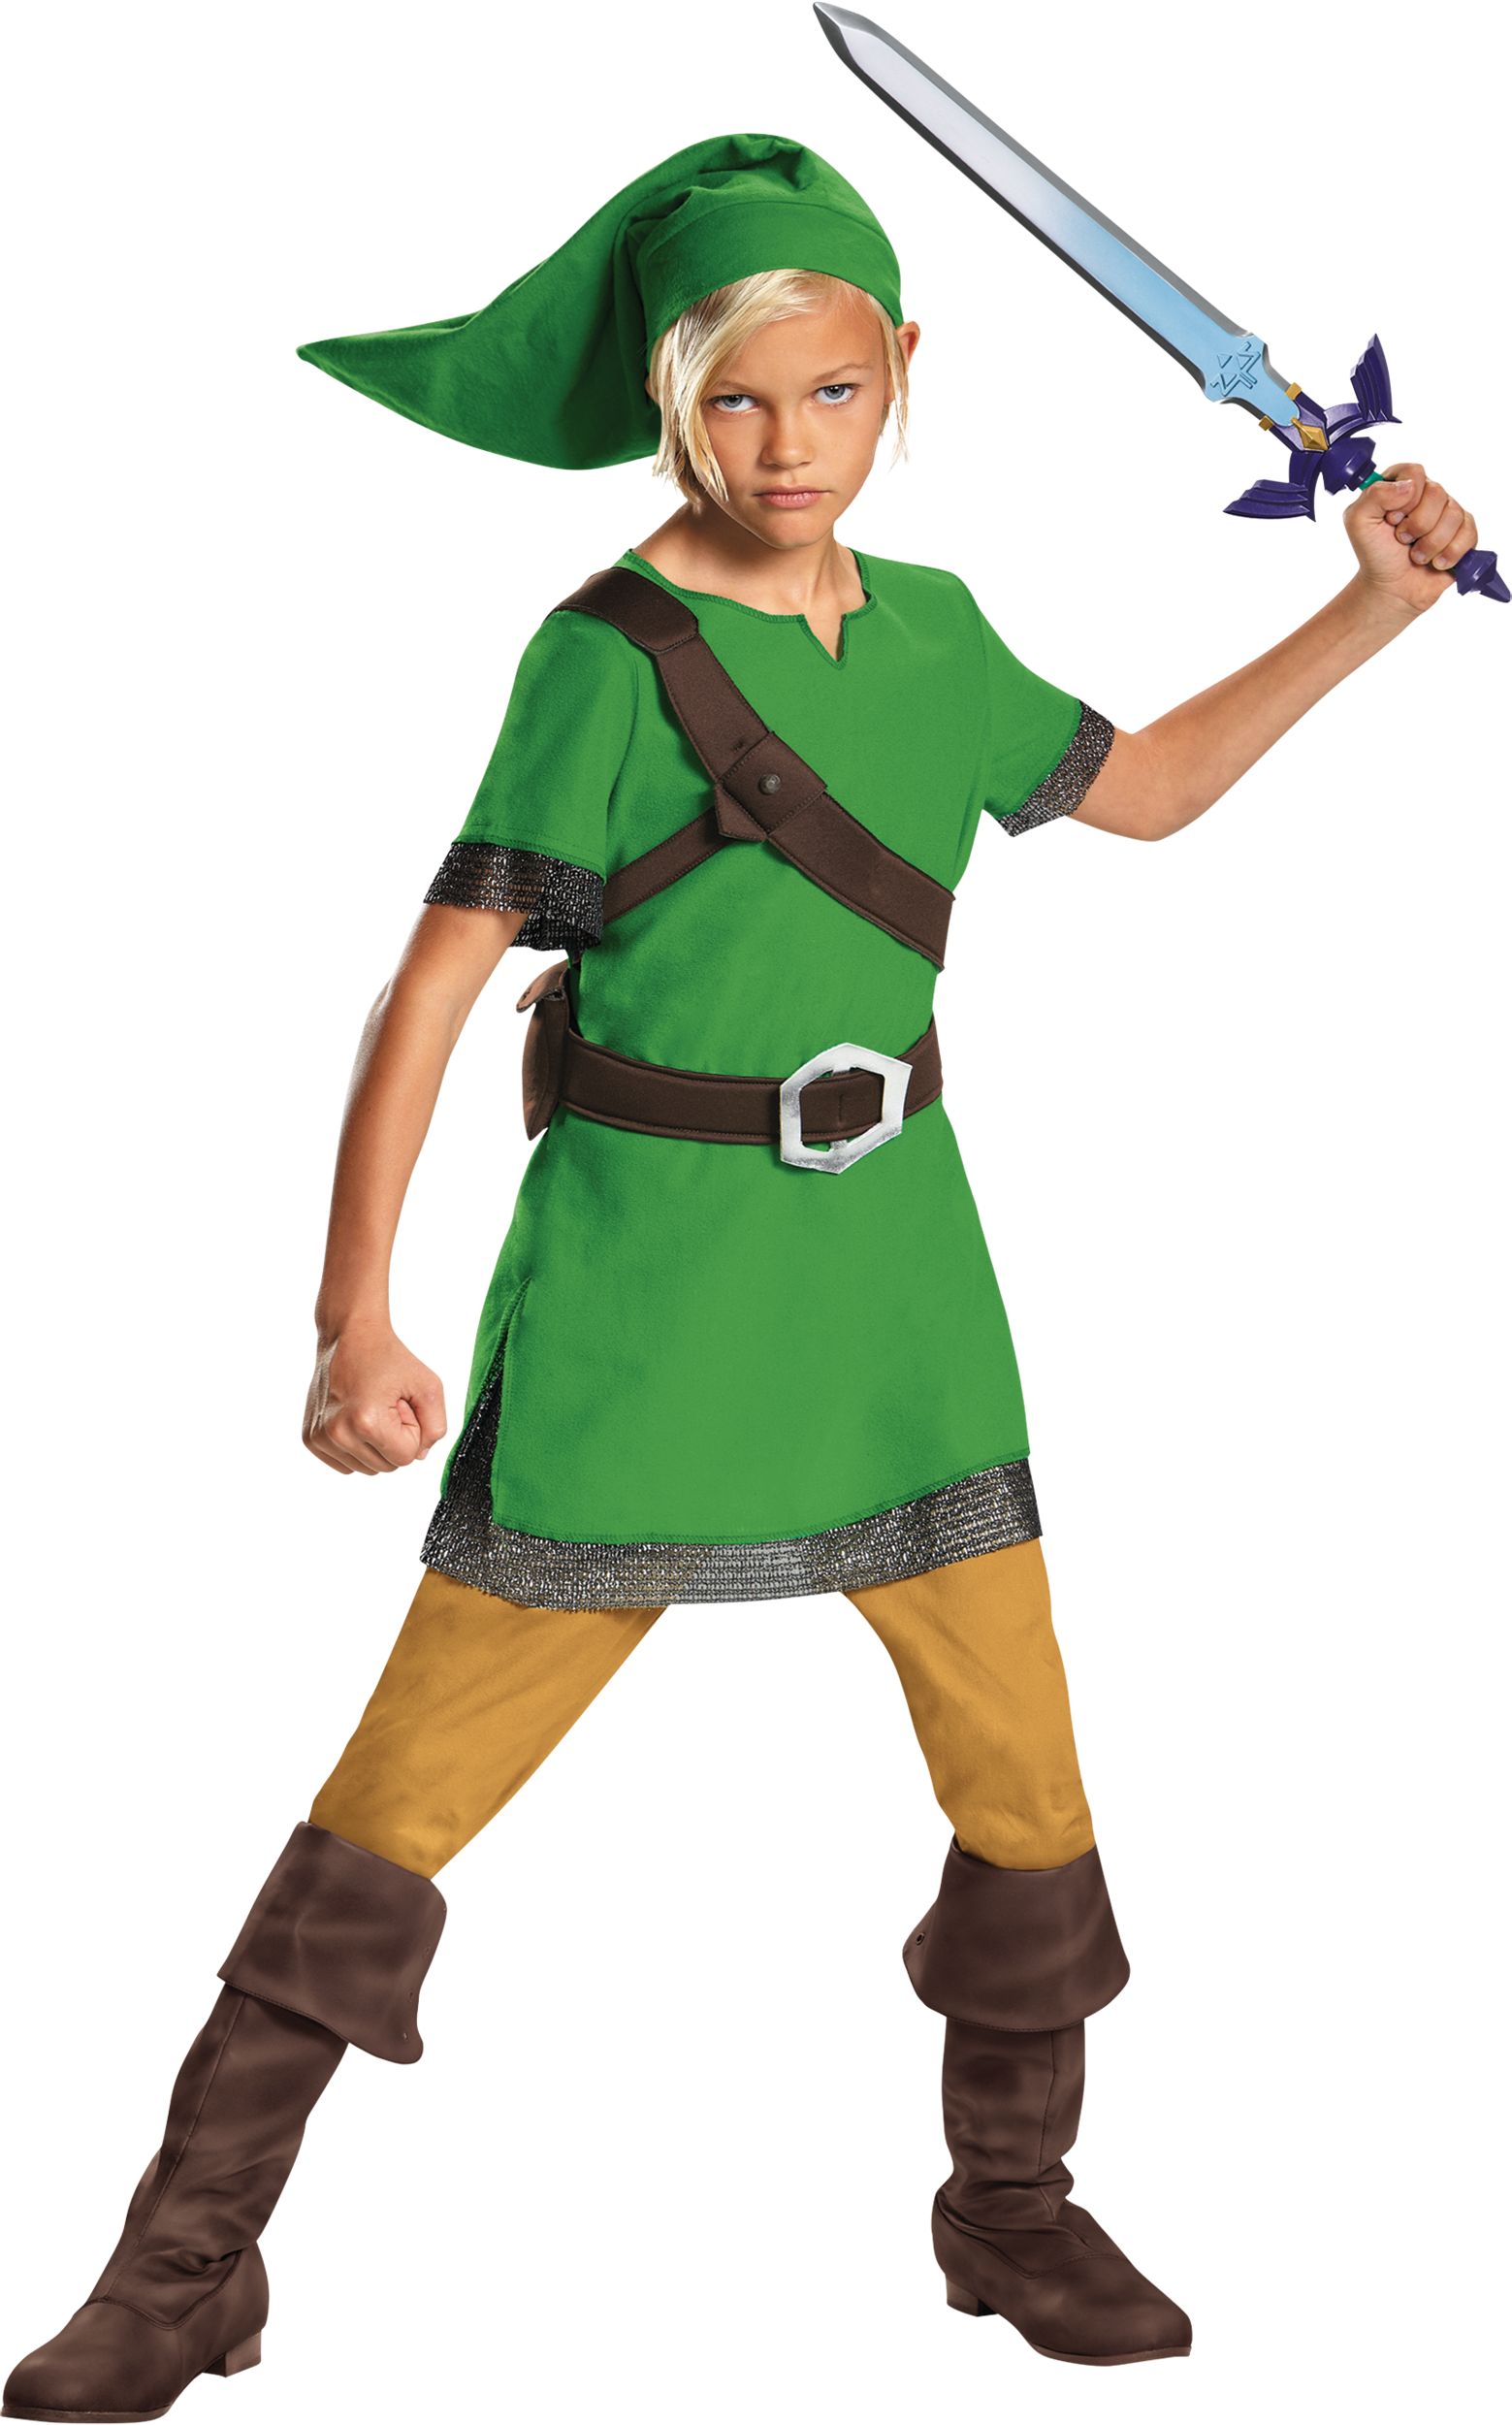 Link from The Legend of Zelda Baby Costume